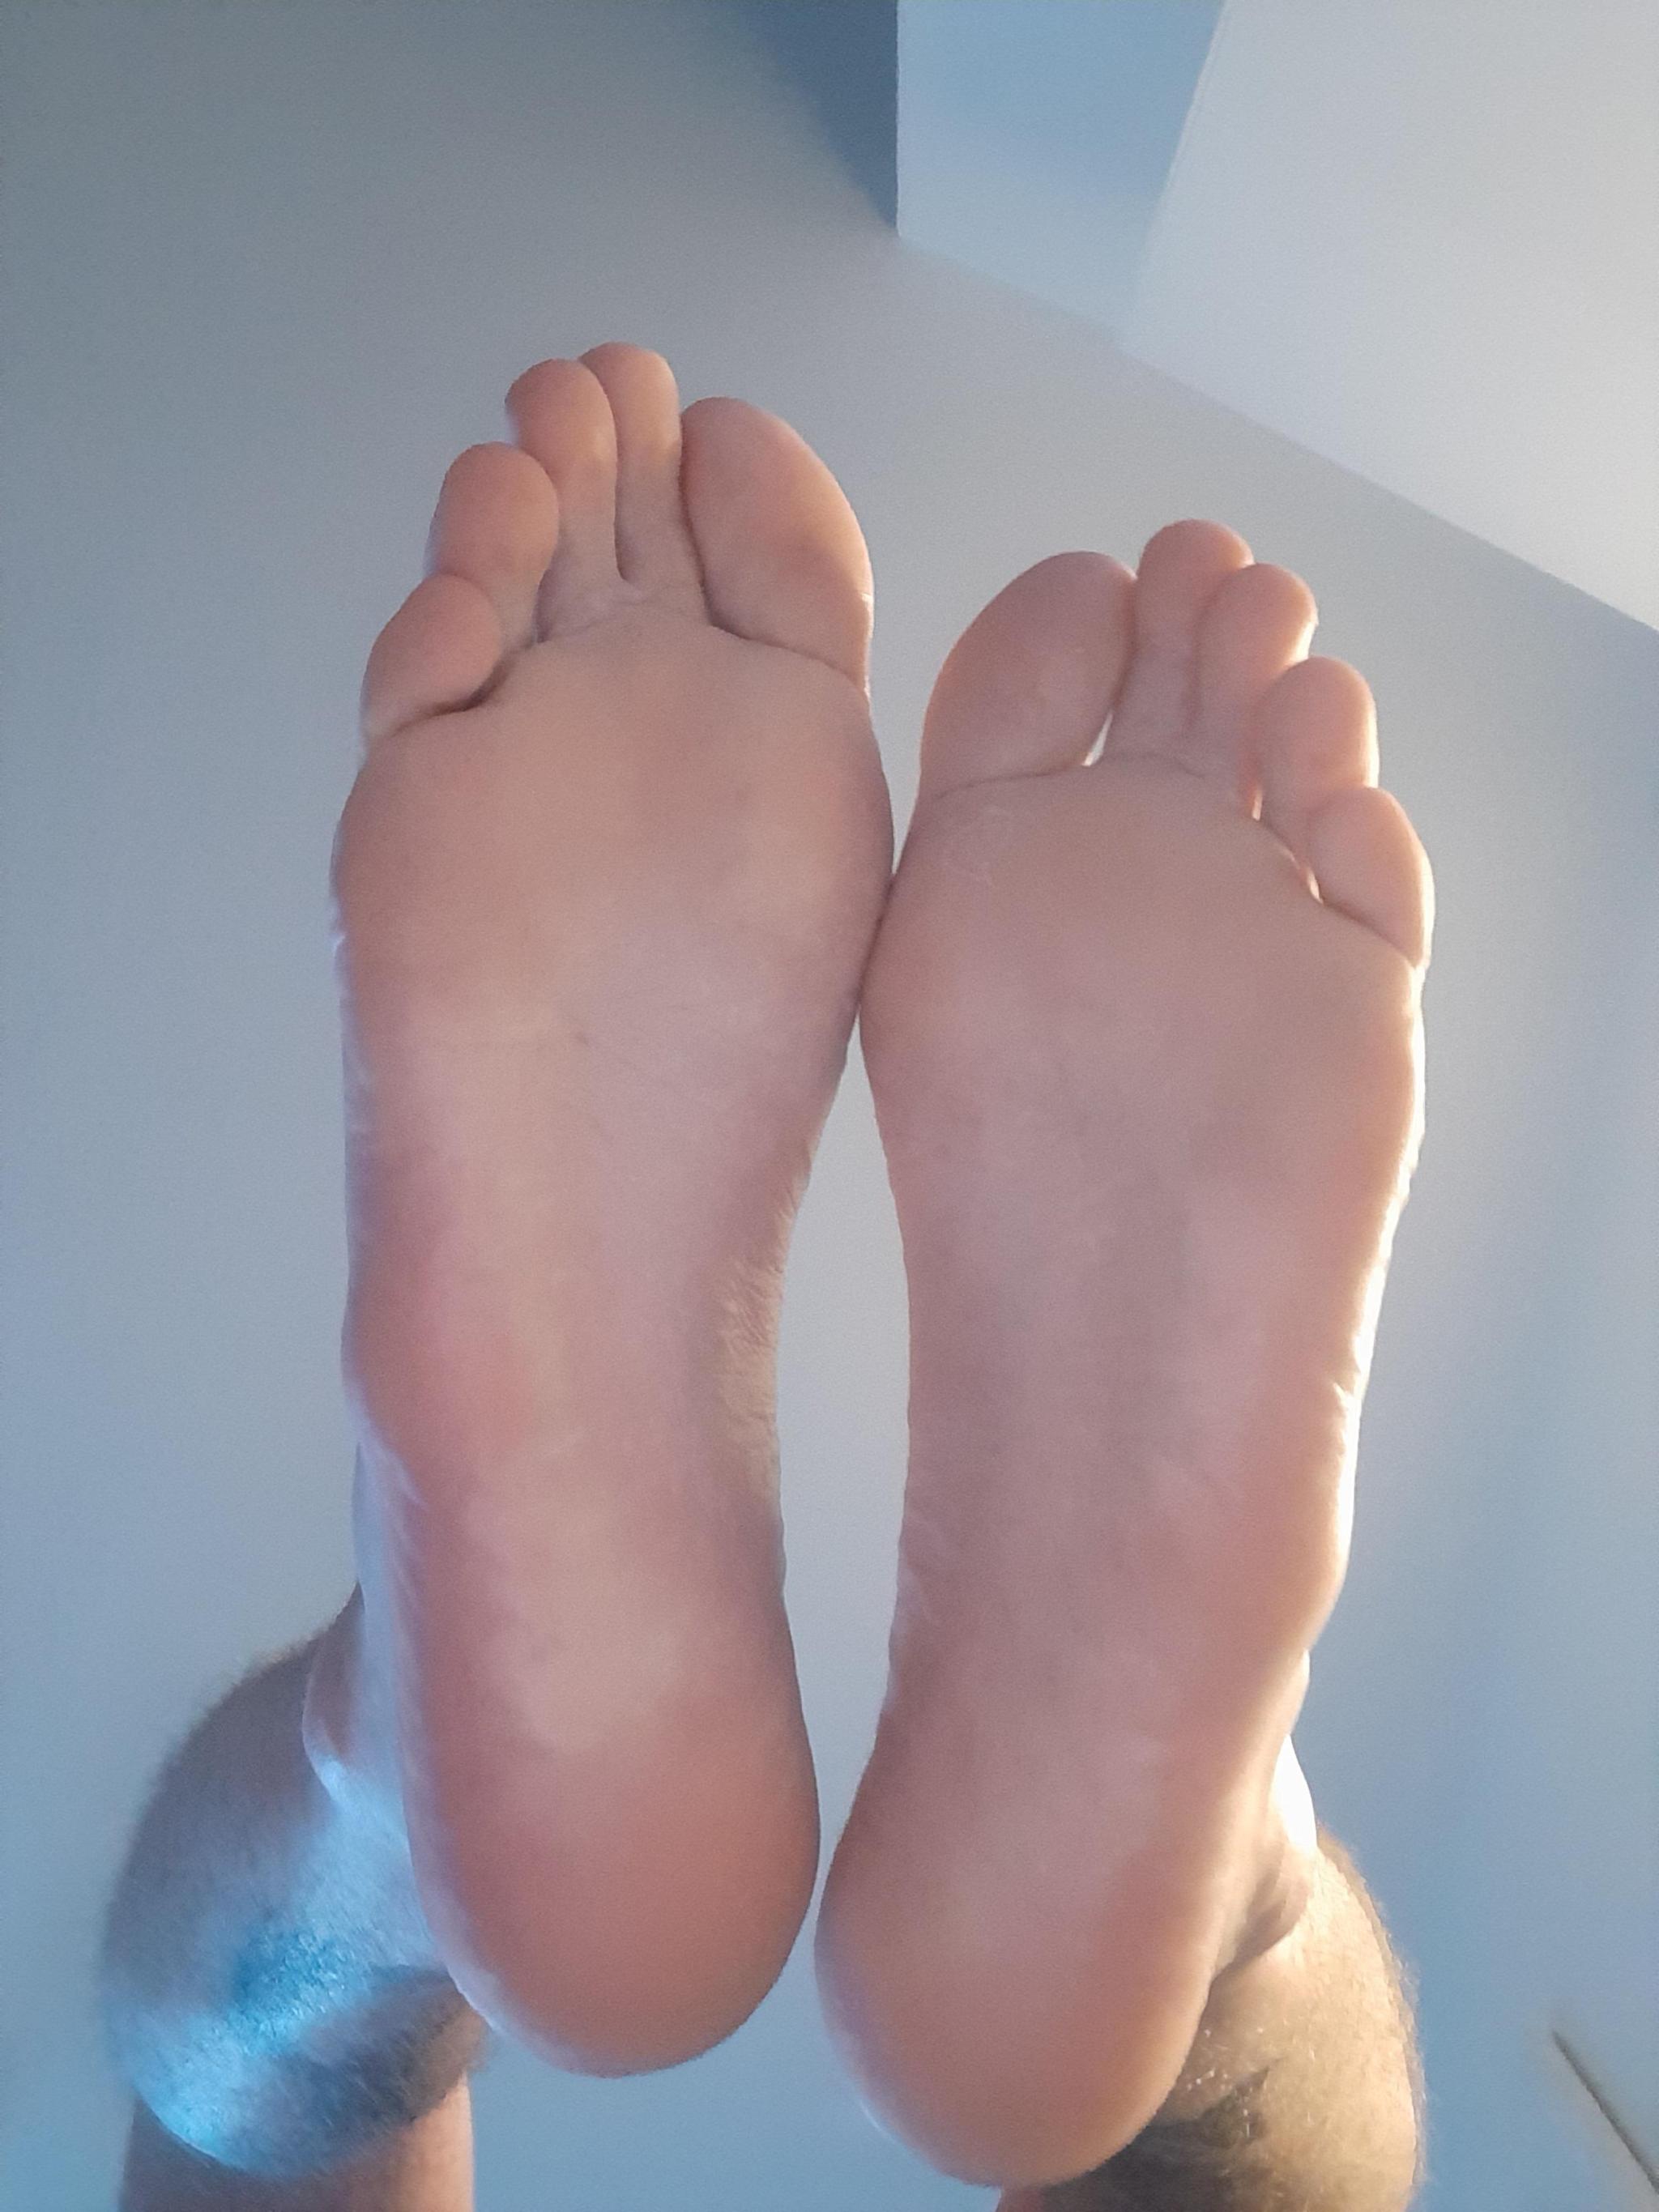 bshsindn: great feet adult photos